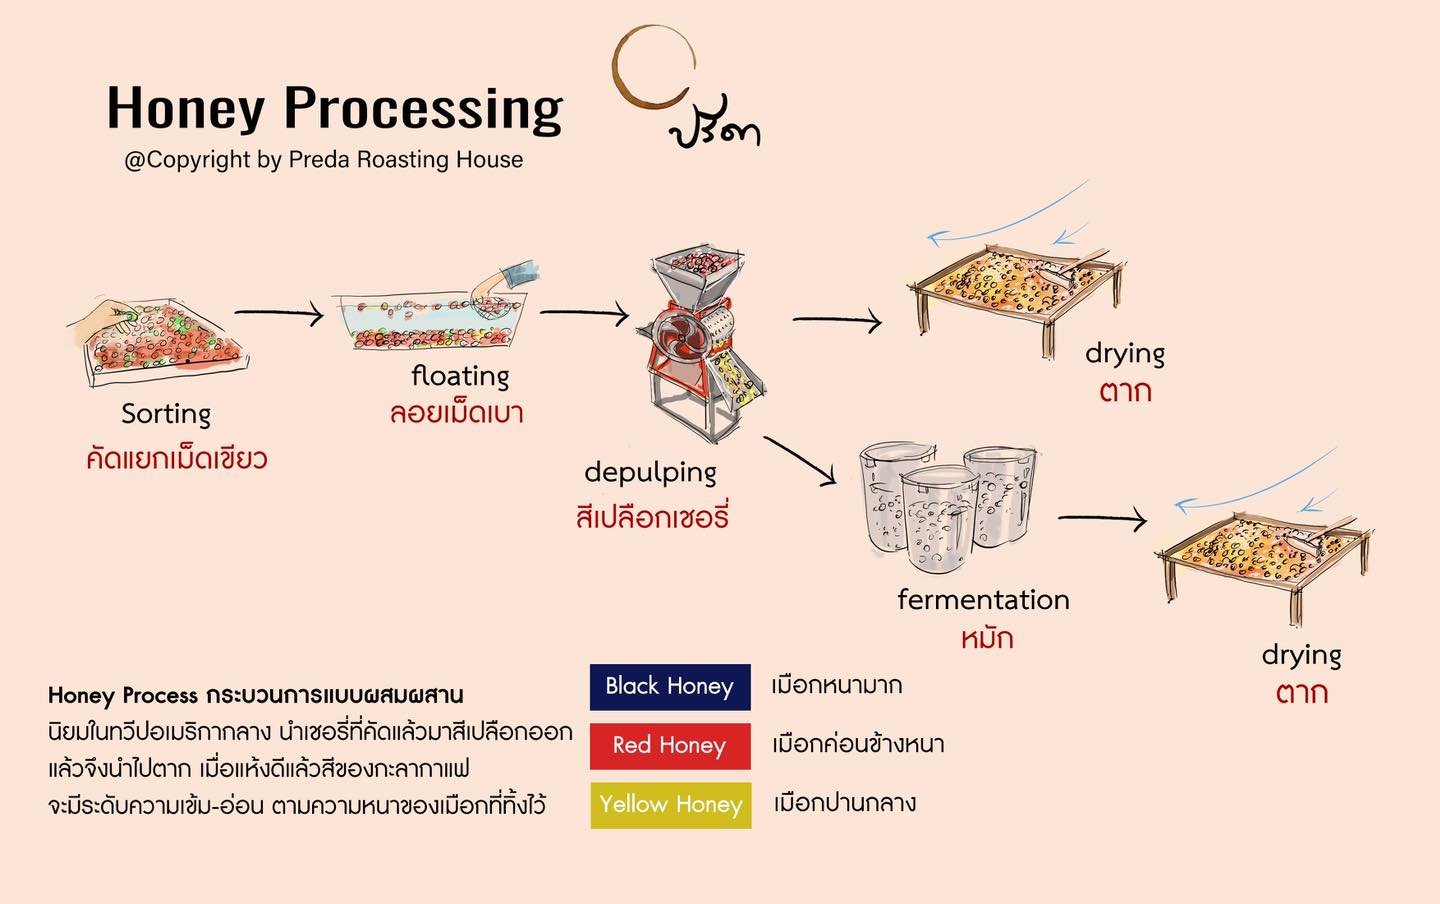 Honey Process กระบวนการแบบผสมผสาน 